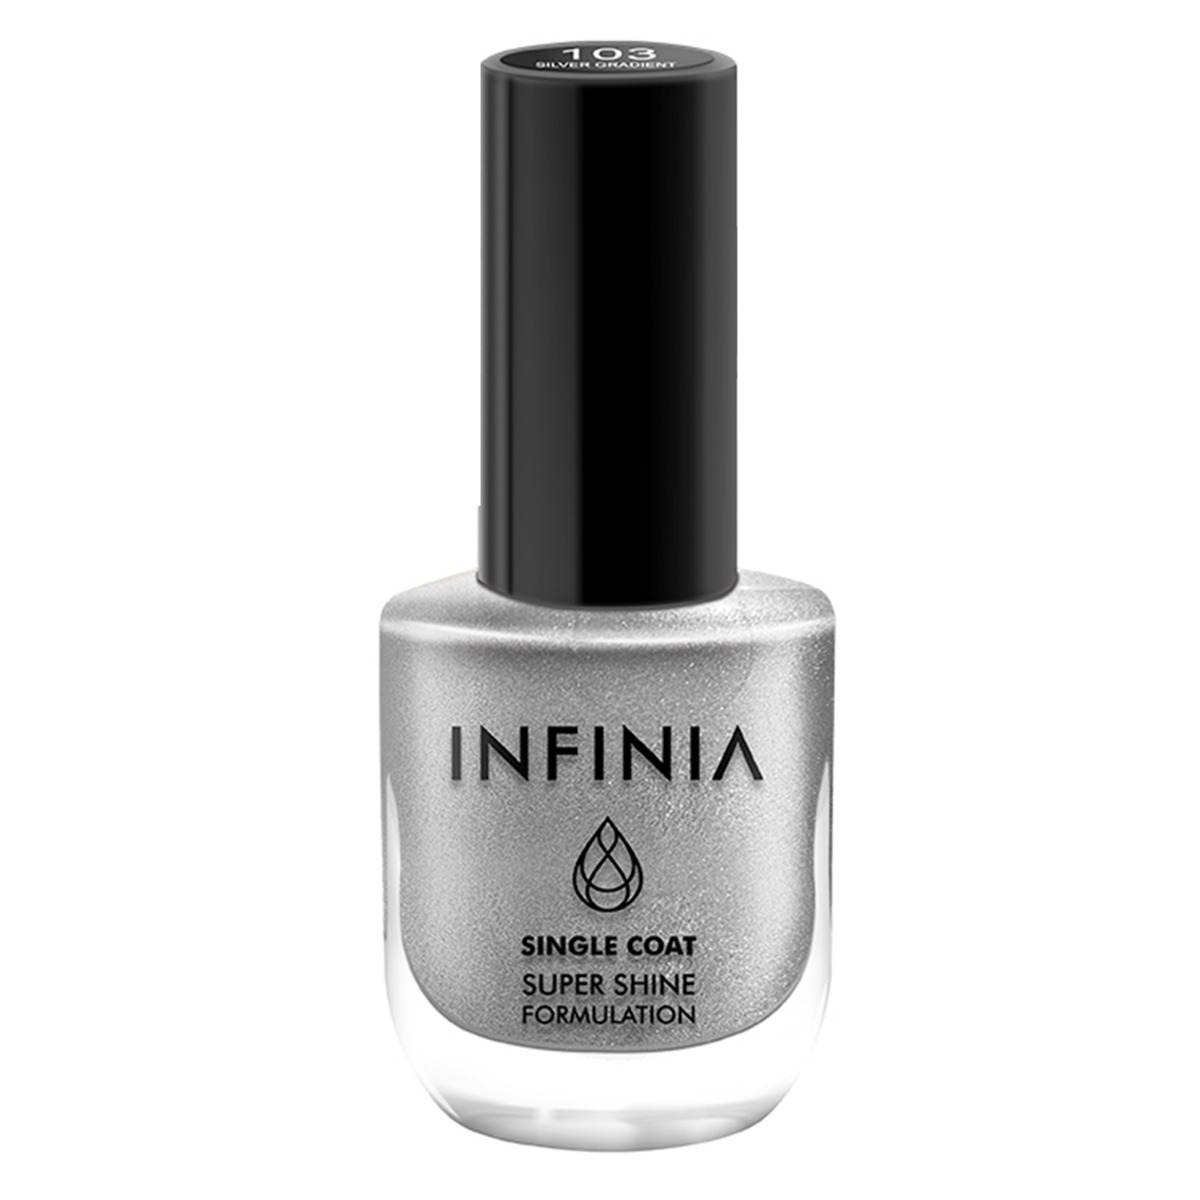 INFINIA Single Coat Super Shine Nail Polish With Ultra High Gloss, 12ml-103 Silver Gradient